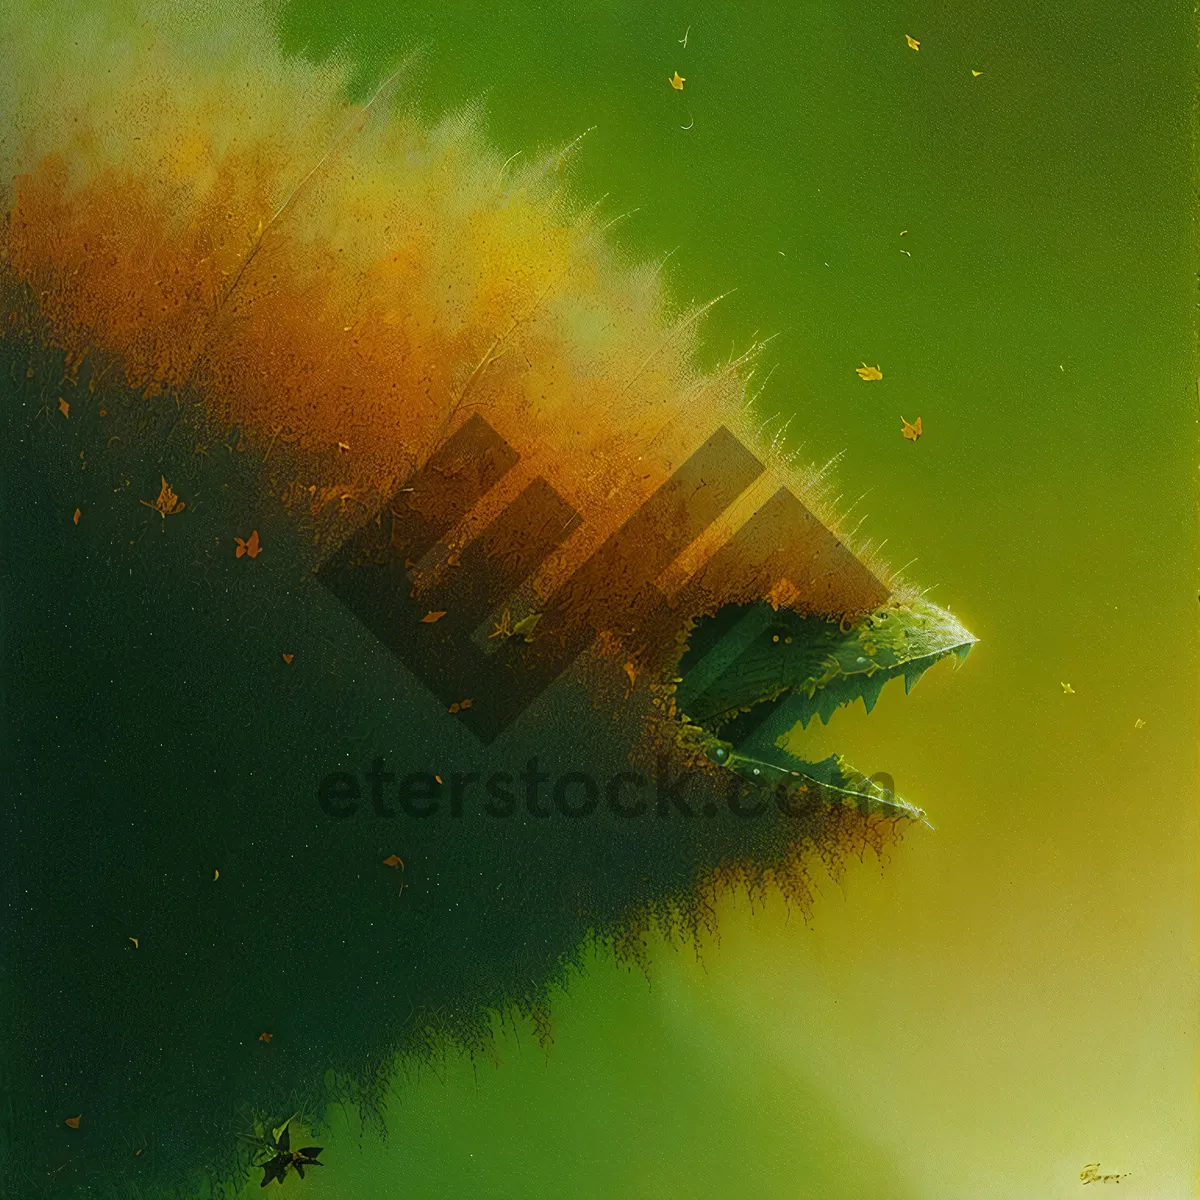 Picture of Shimmering Aquatic Larva in Illuminated Water